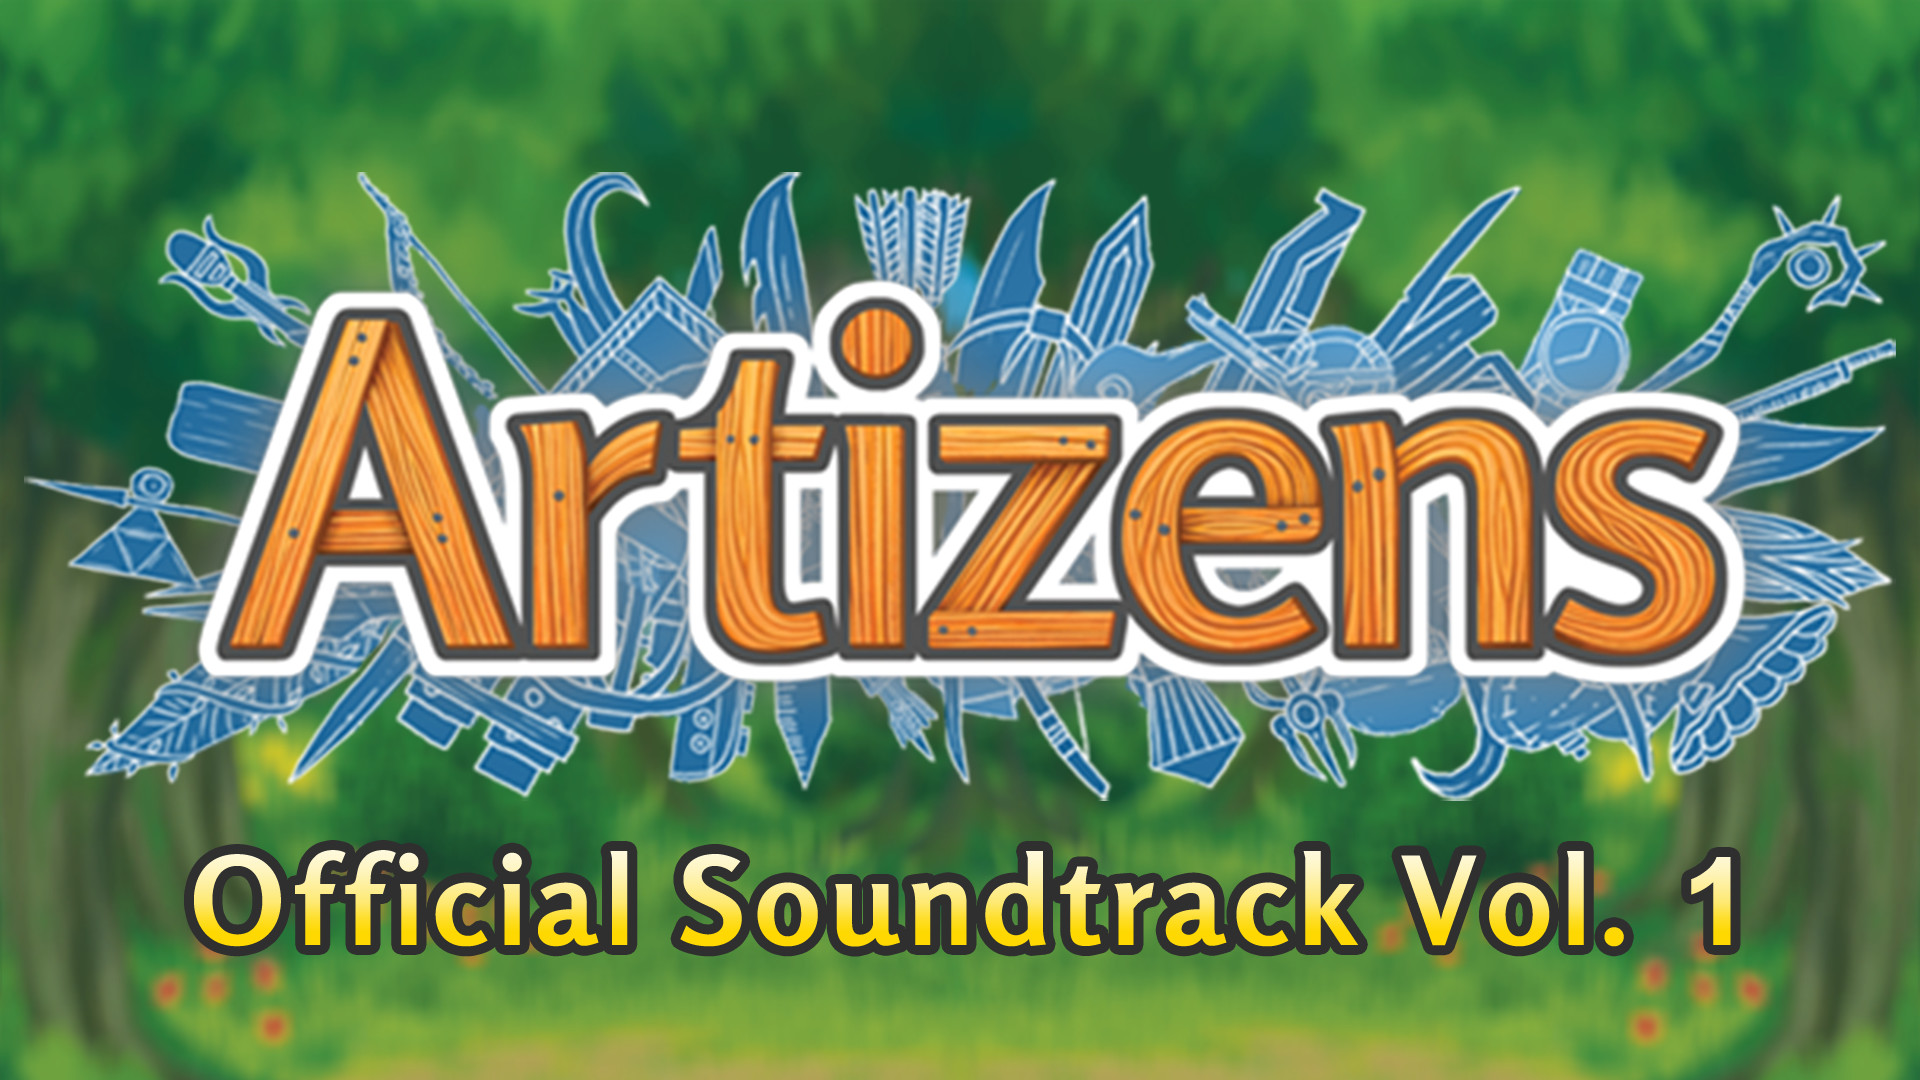 Artizens Official Soundtrack Vol. 1 Featured Screenshot #1